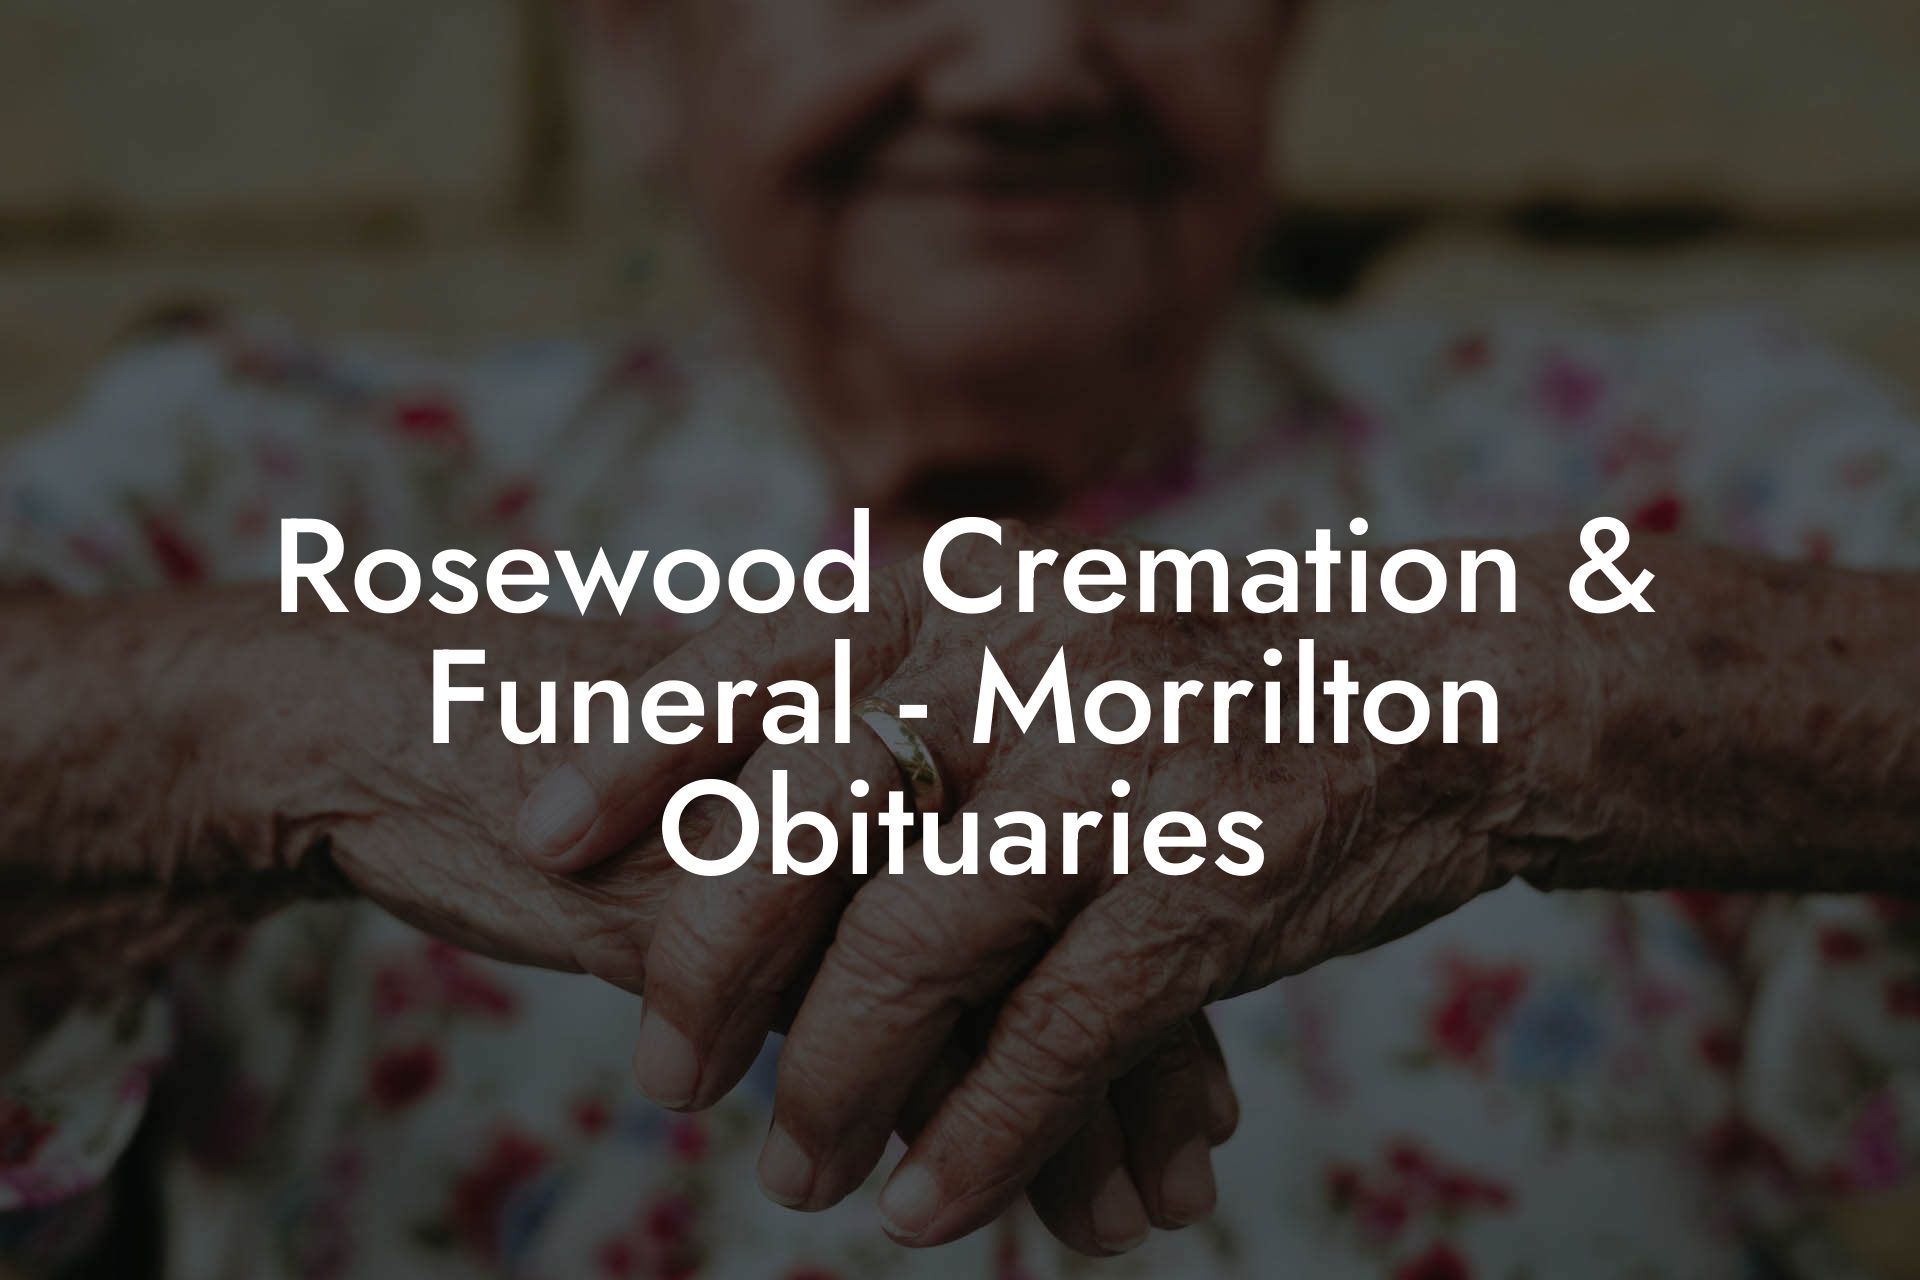 Rosewood Cremation & Funeral - Morrilton Obituaries